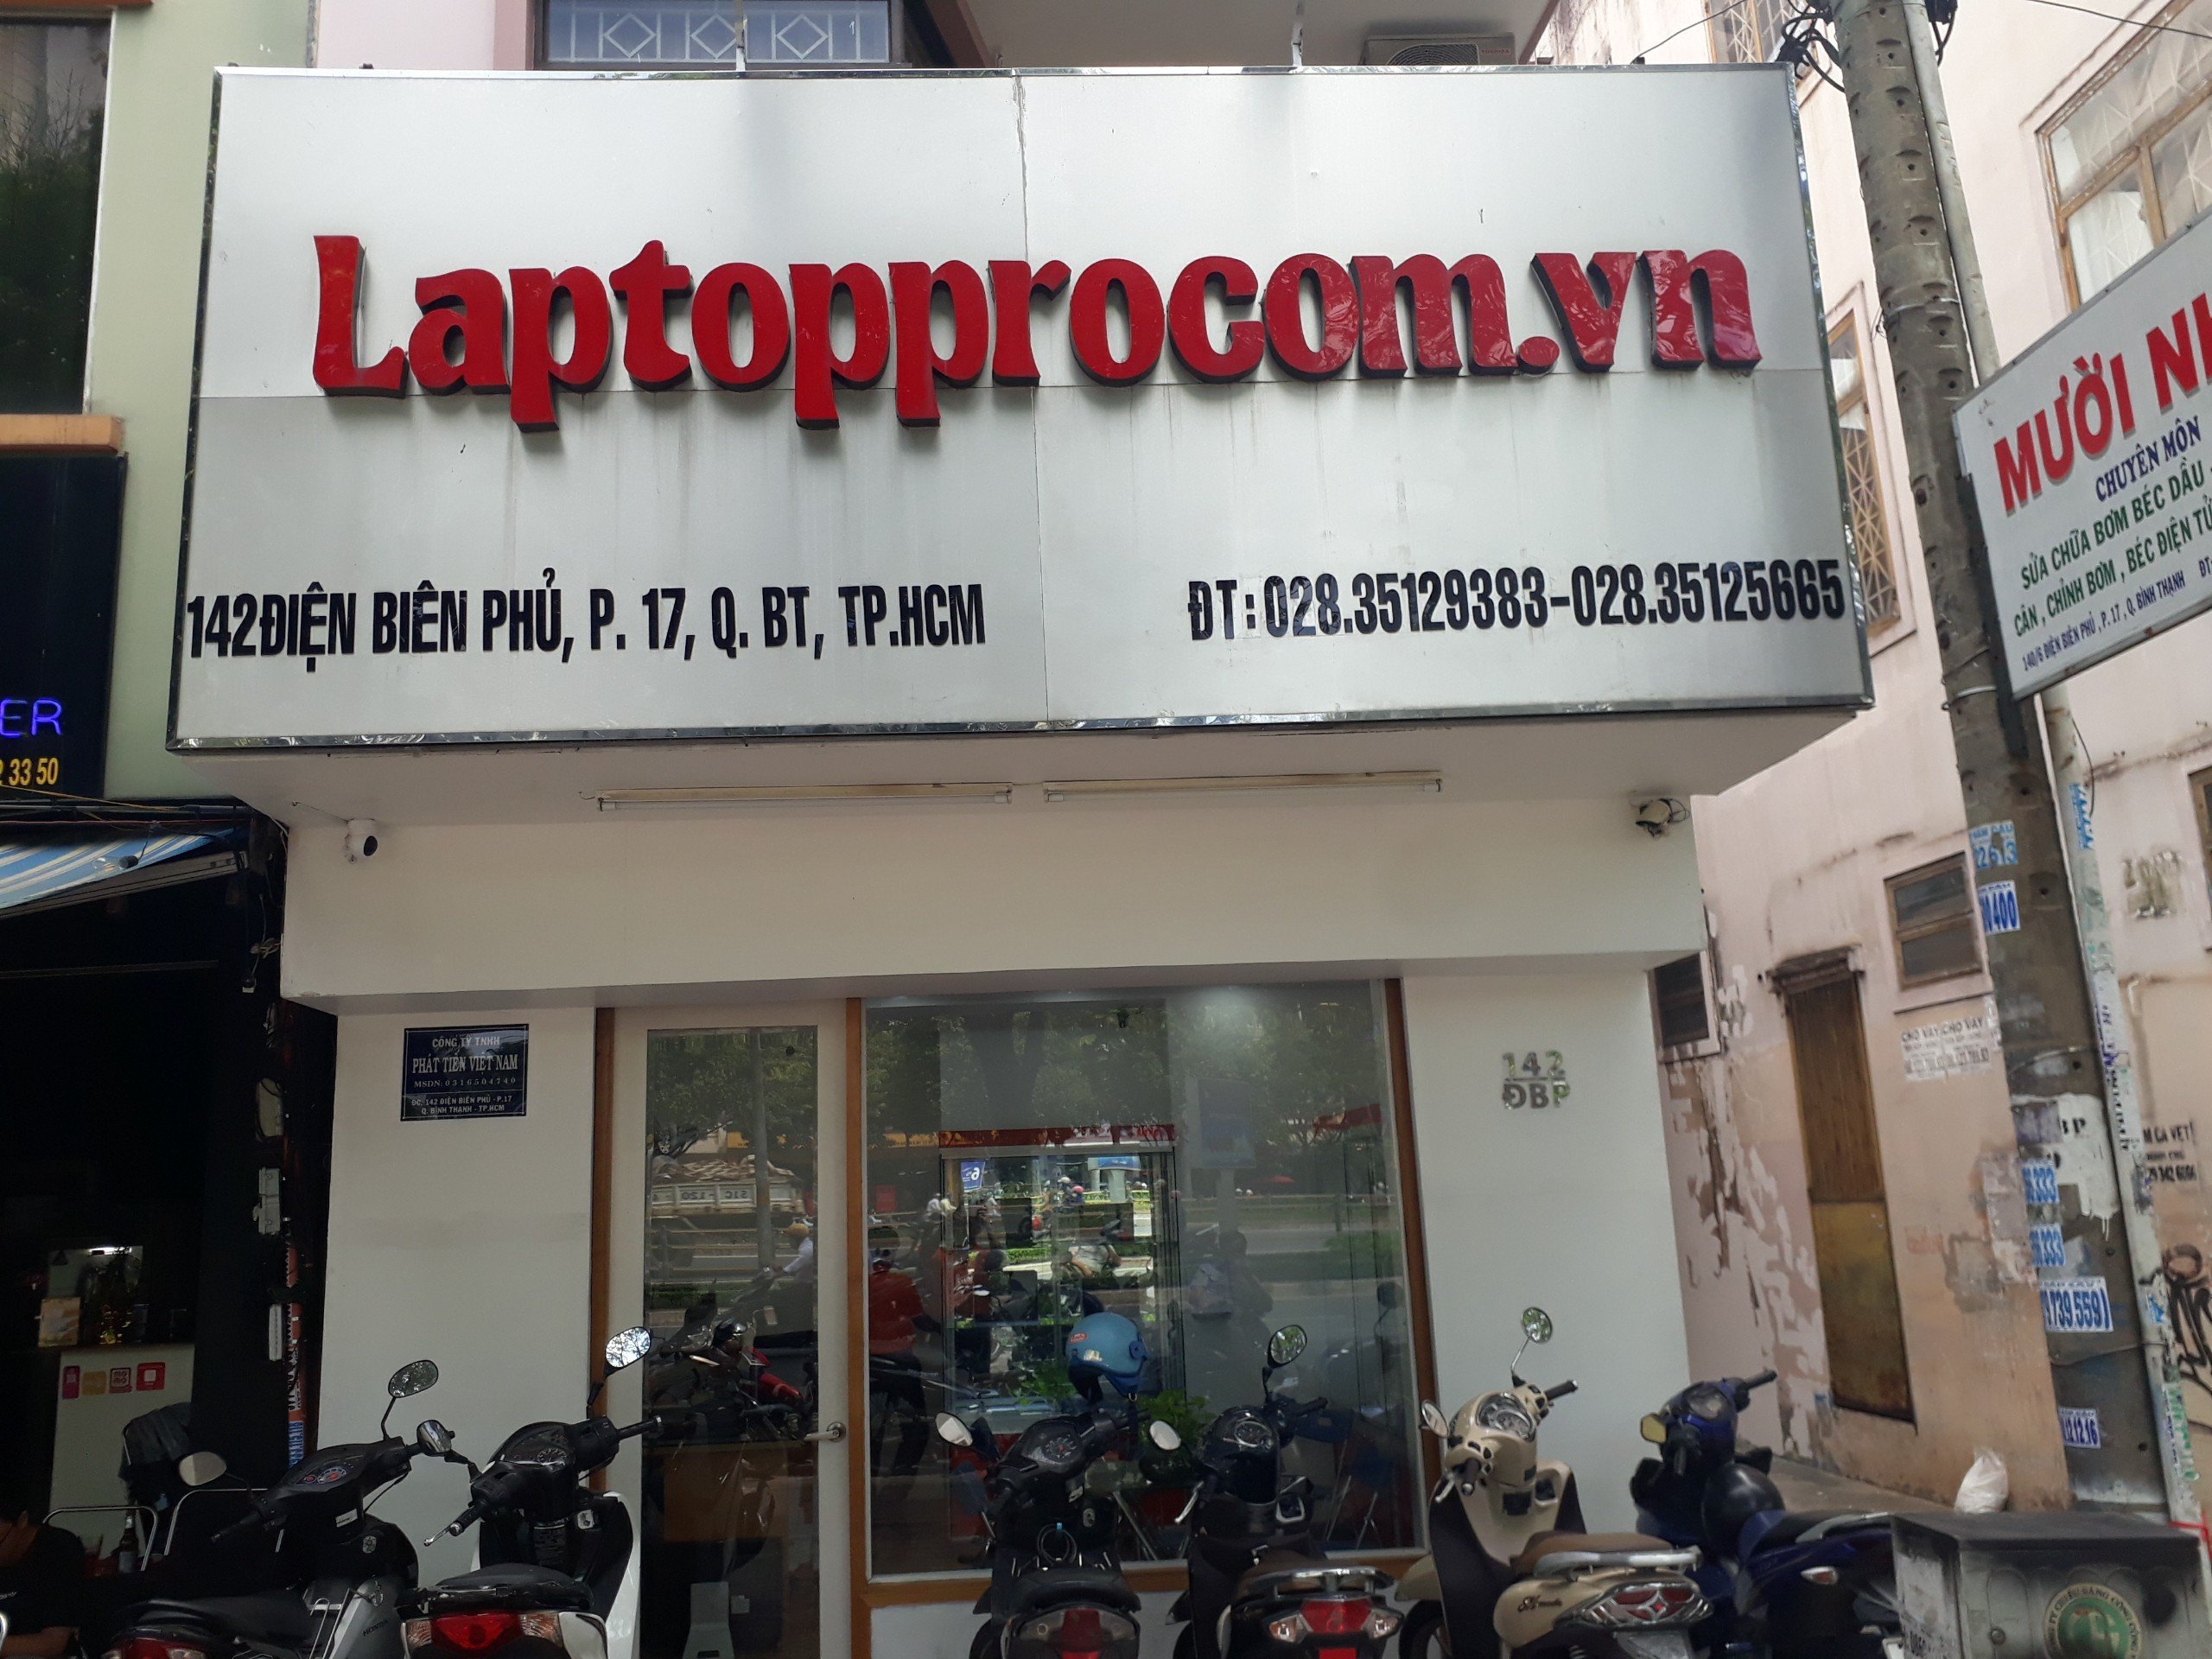 laptopprocom